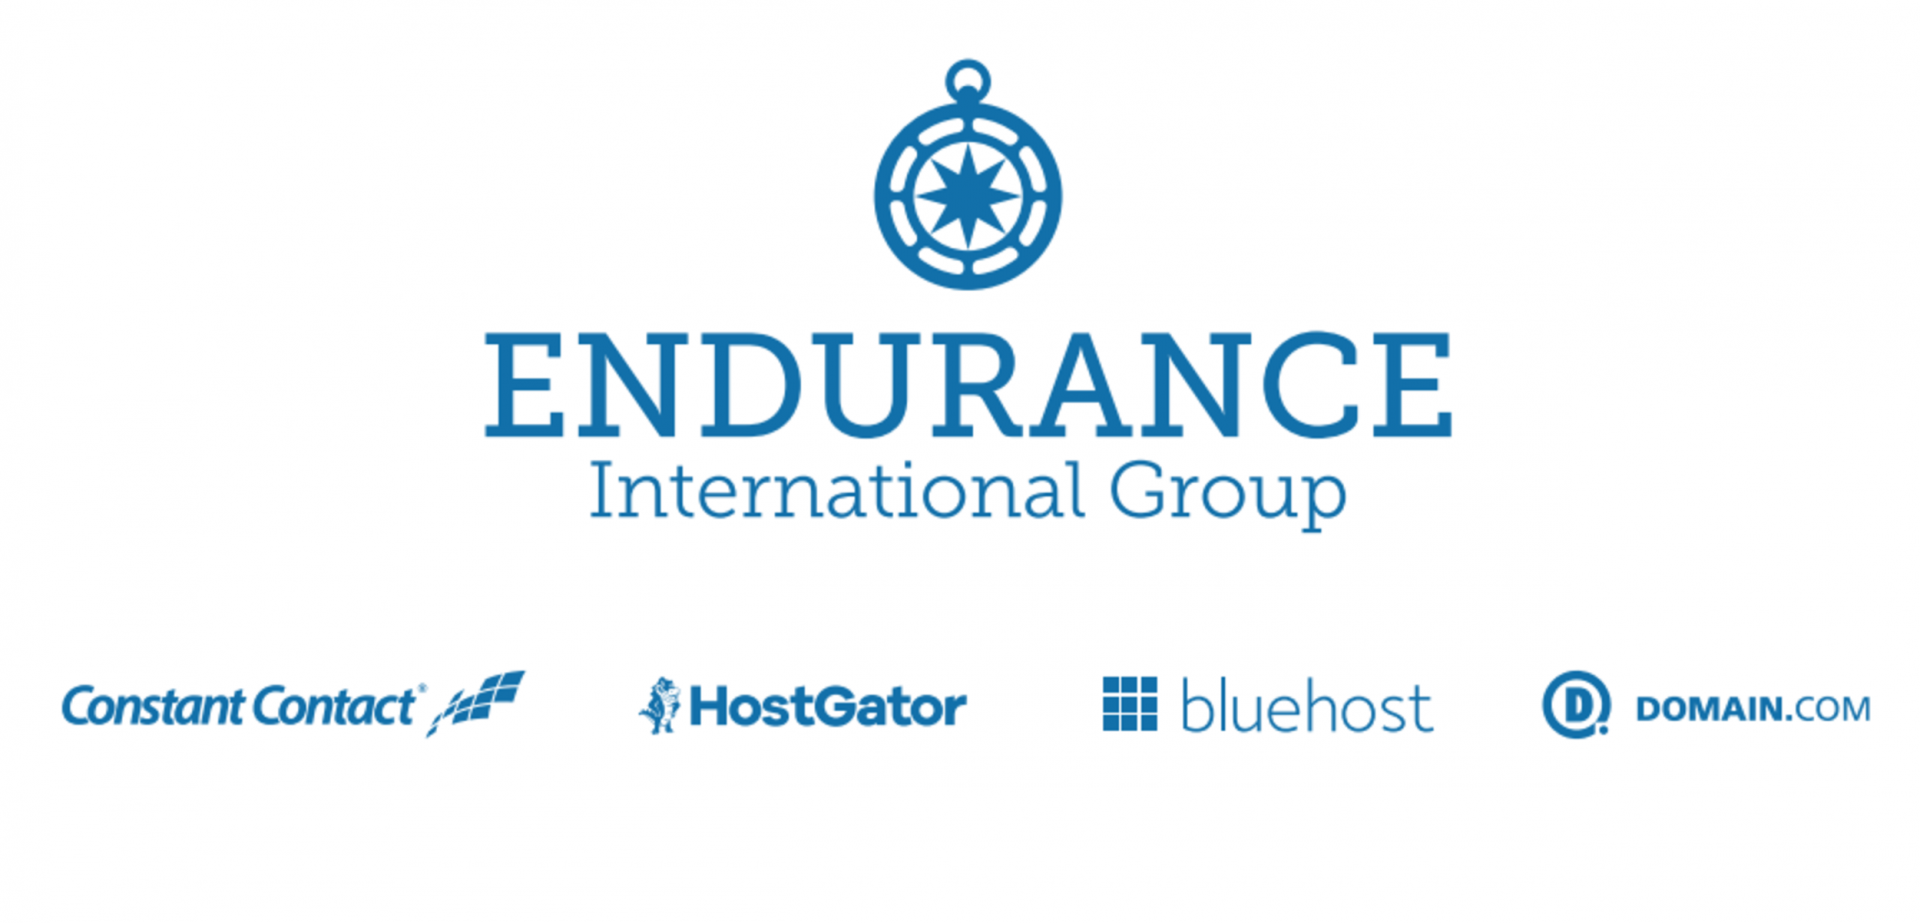 Фирма домен. Endurance фирма. Балтик Гроуп Интернешнл. Beaulieu International Group логотип. Fletcher Group holdings логотип.